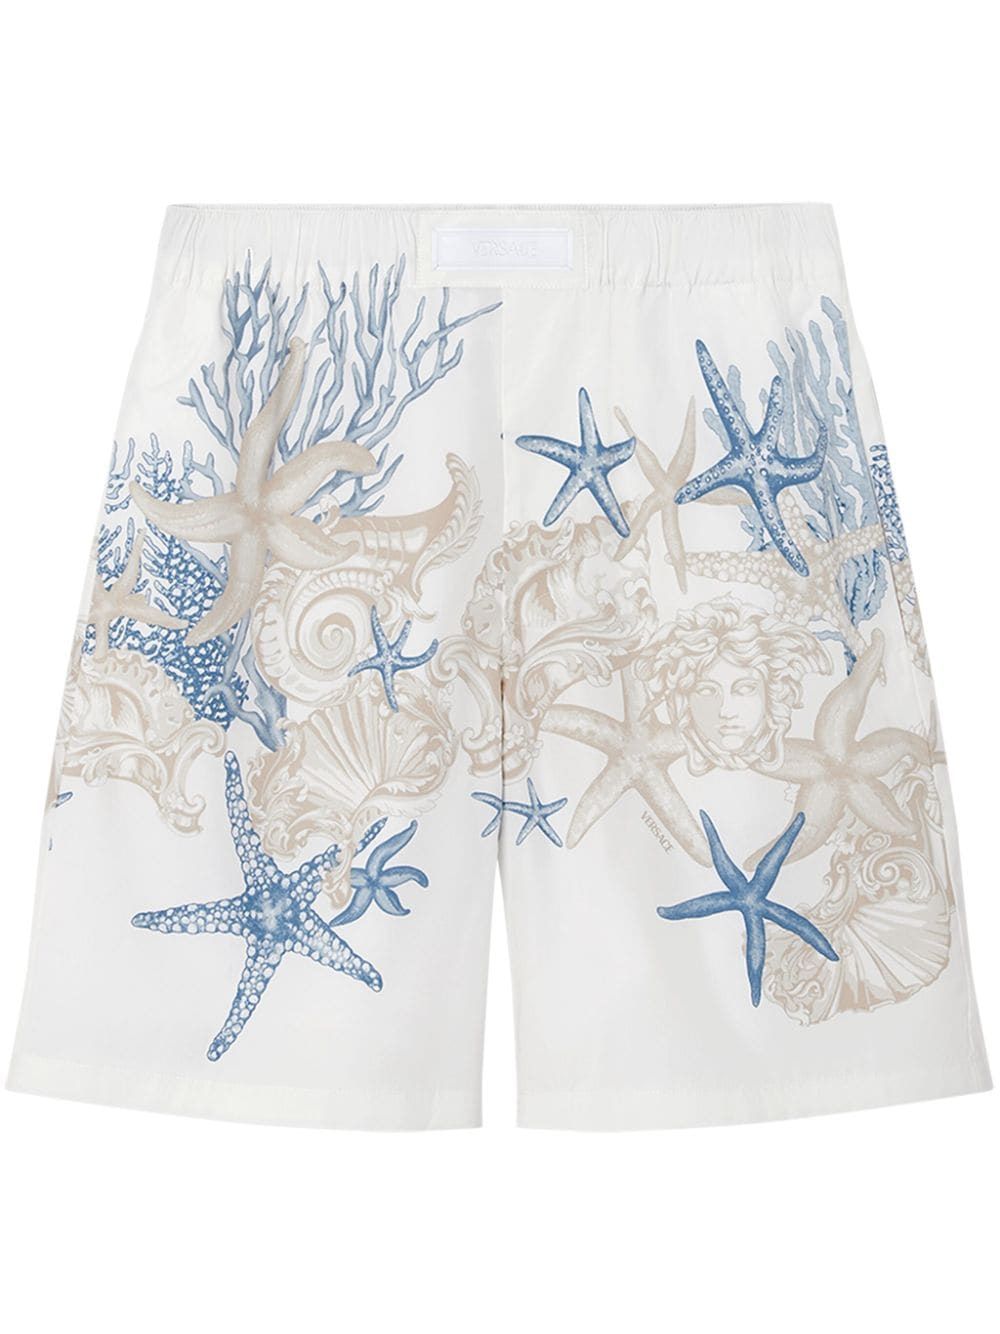 VERSACE Men's FW24 Star-Printed Coral Shorts